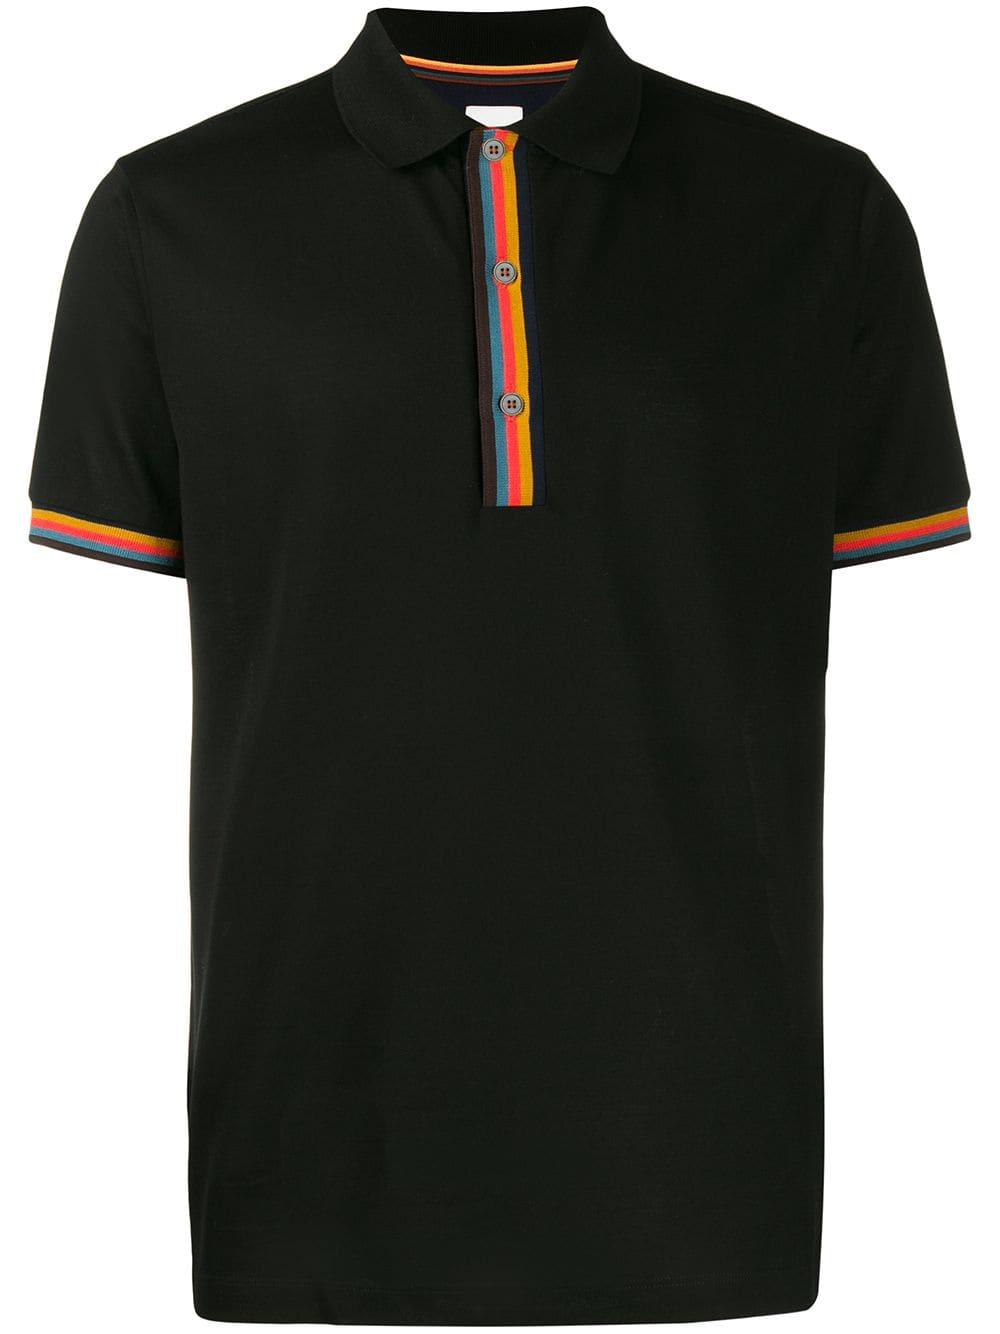 Paul Smith Artist Stripe Polo Shirt in Black for Men - Save 29% - Lyst